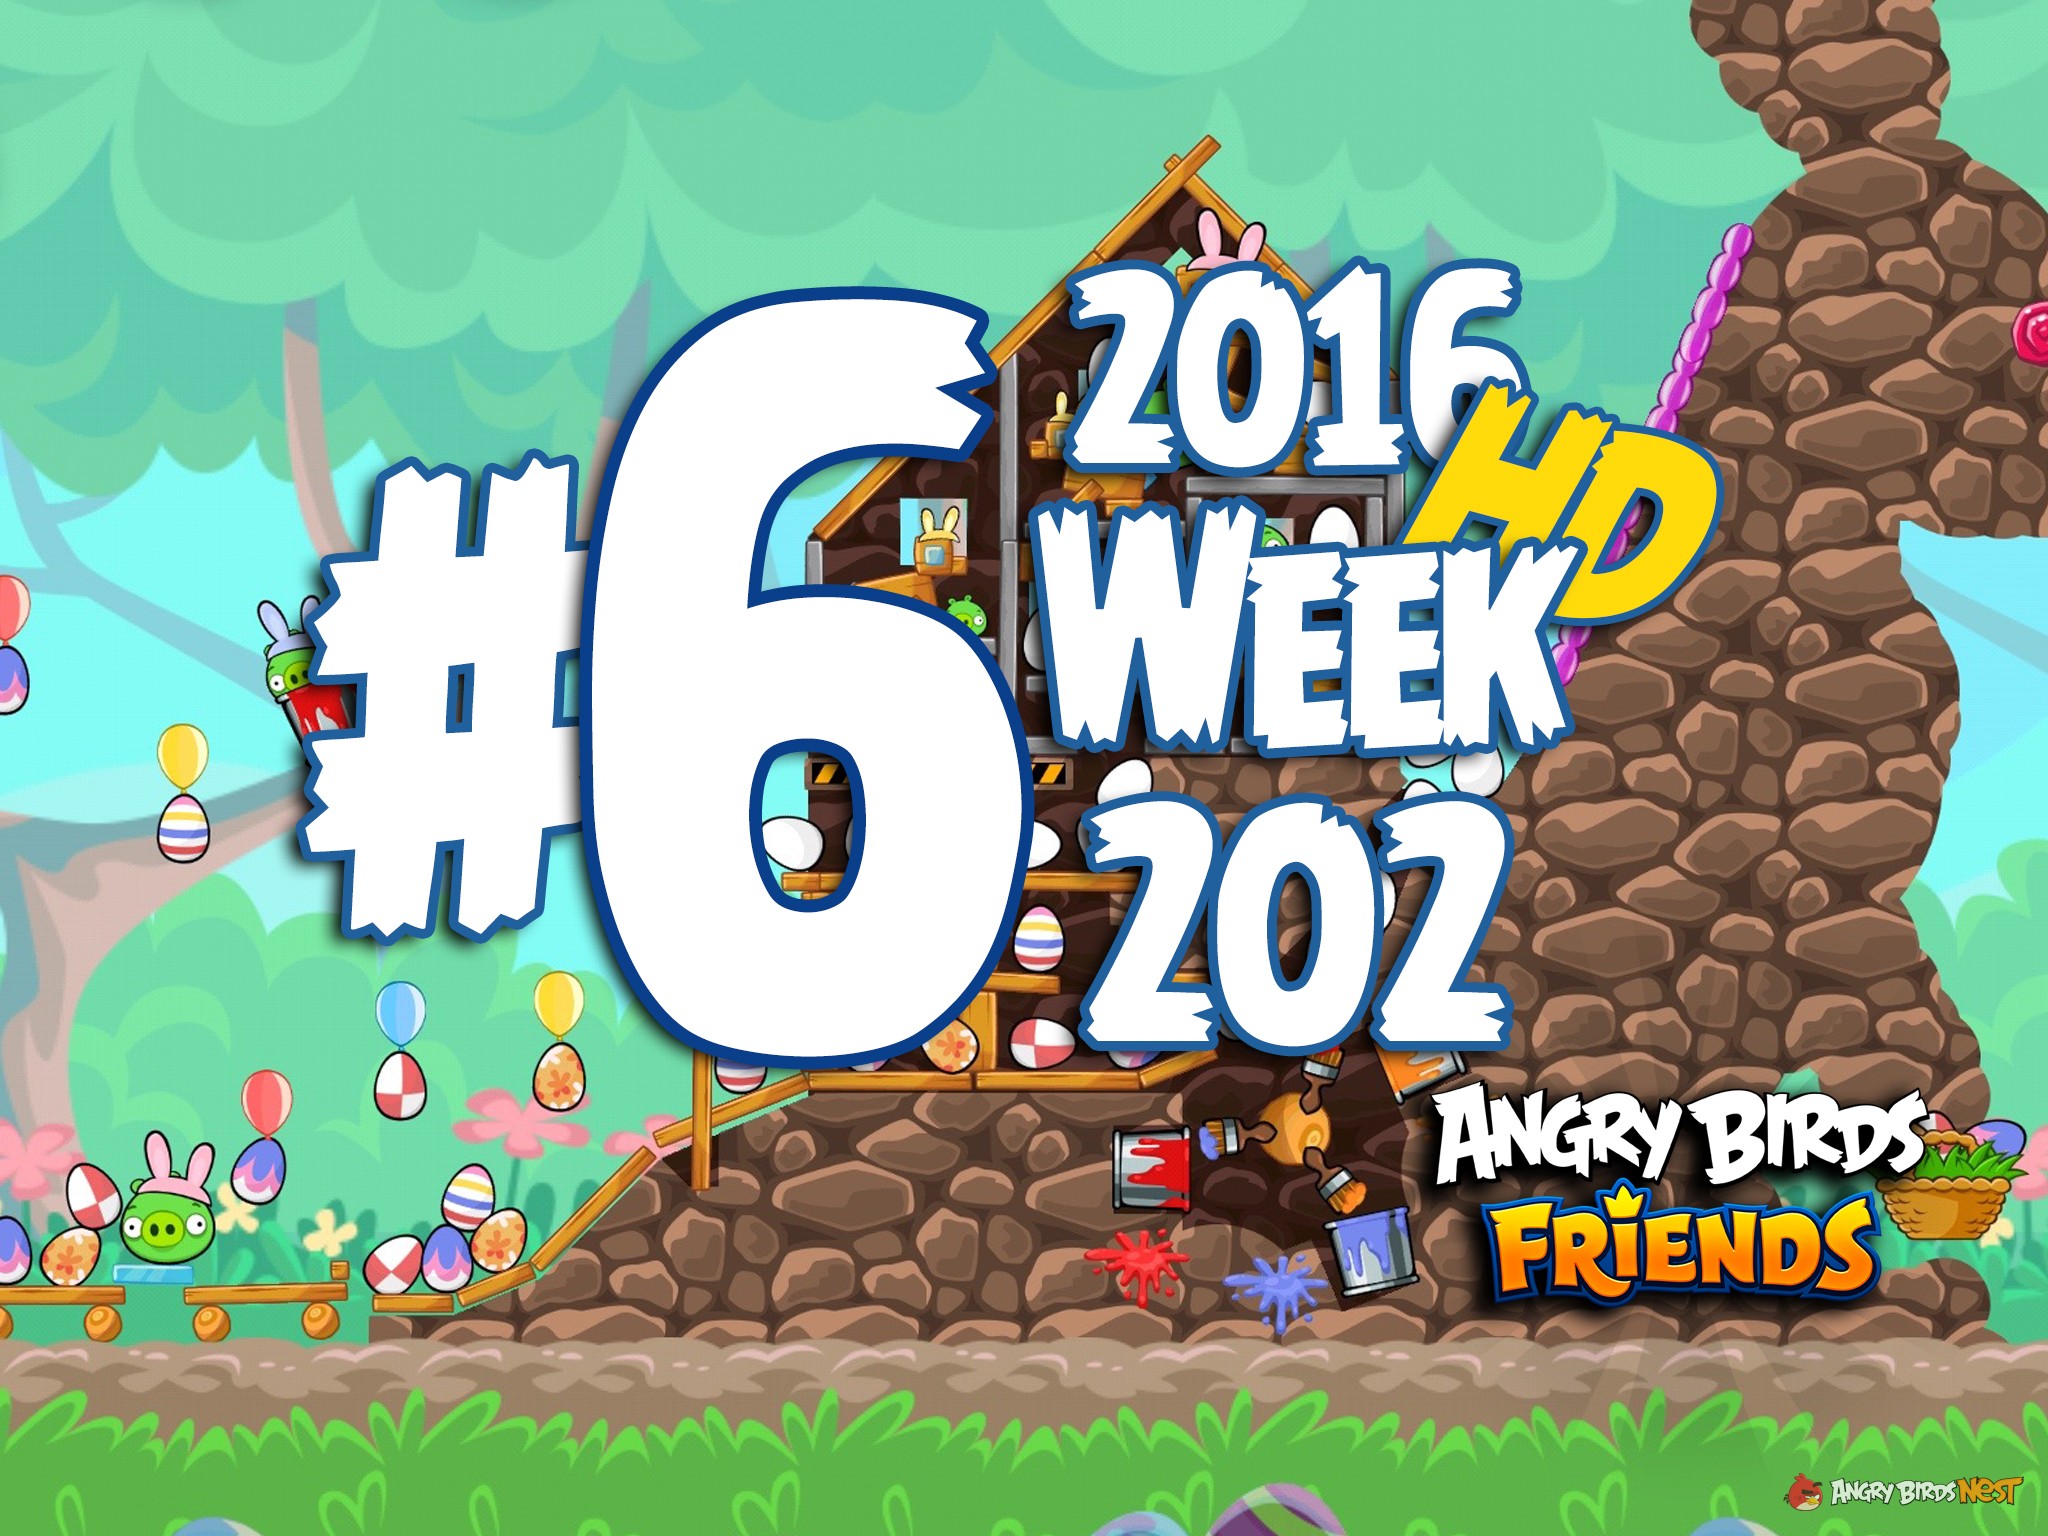 Angry Birds Friends Tournament Level 6 Week 202 Walkthrough | March 24th 2016